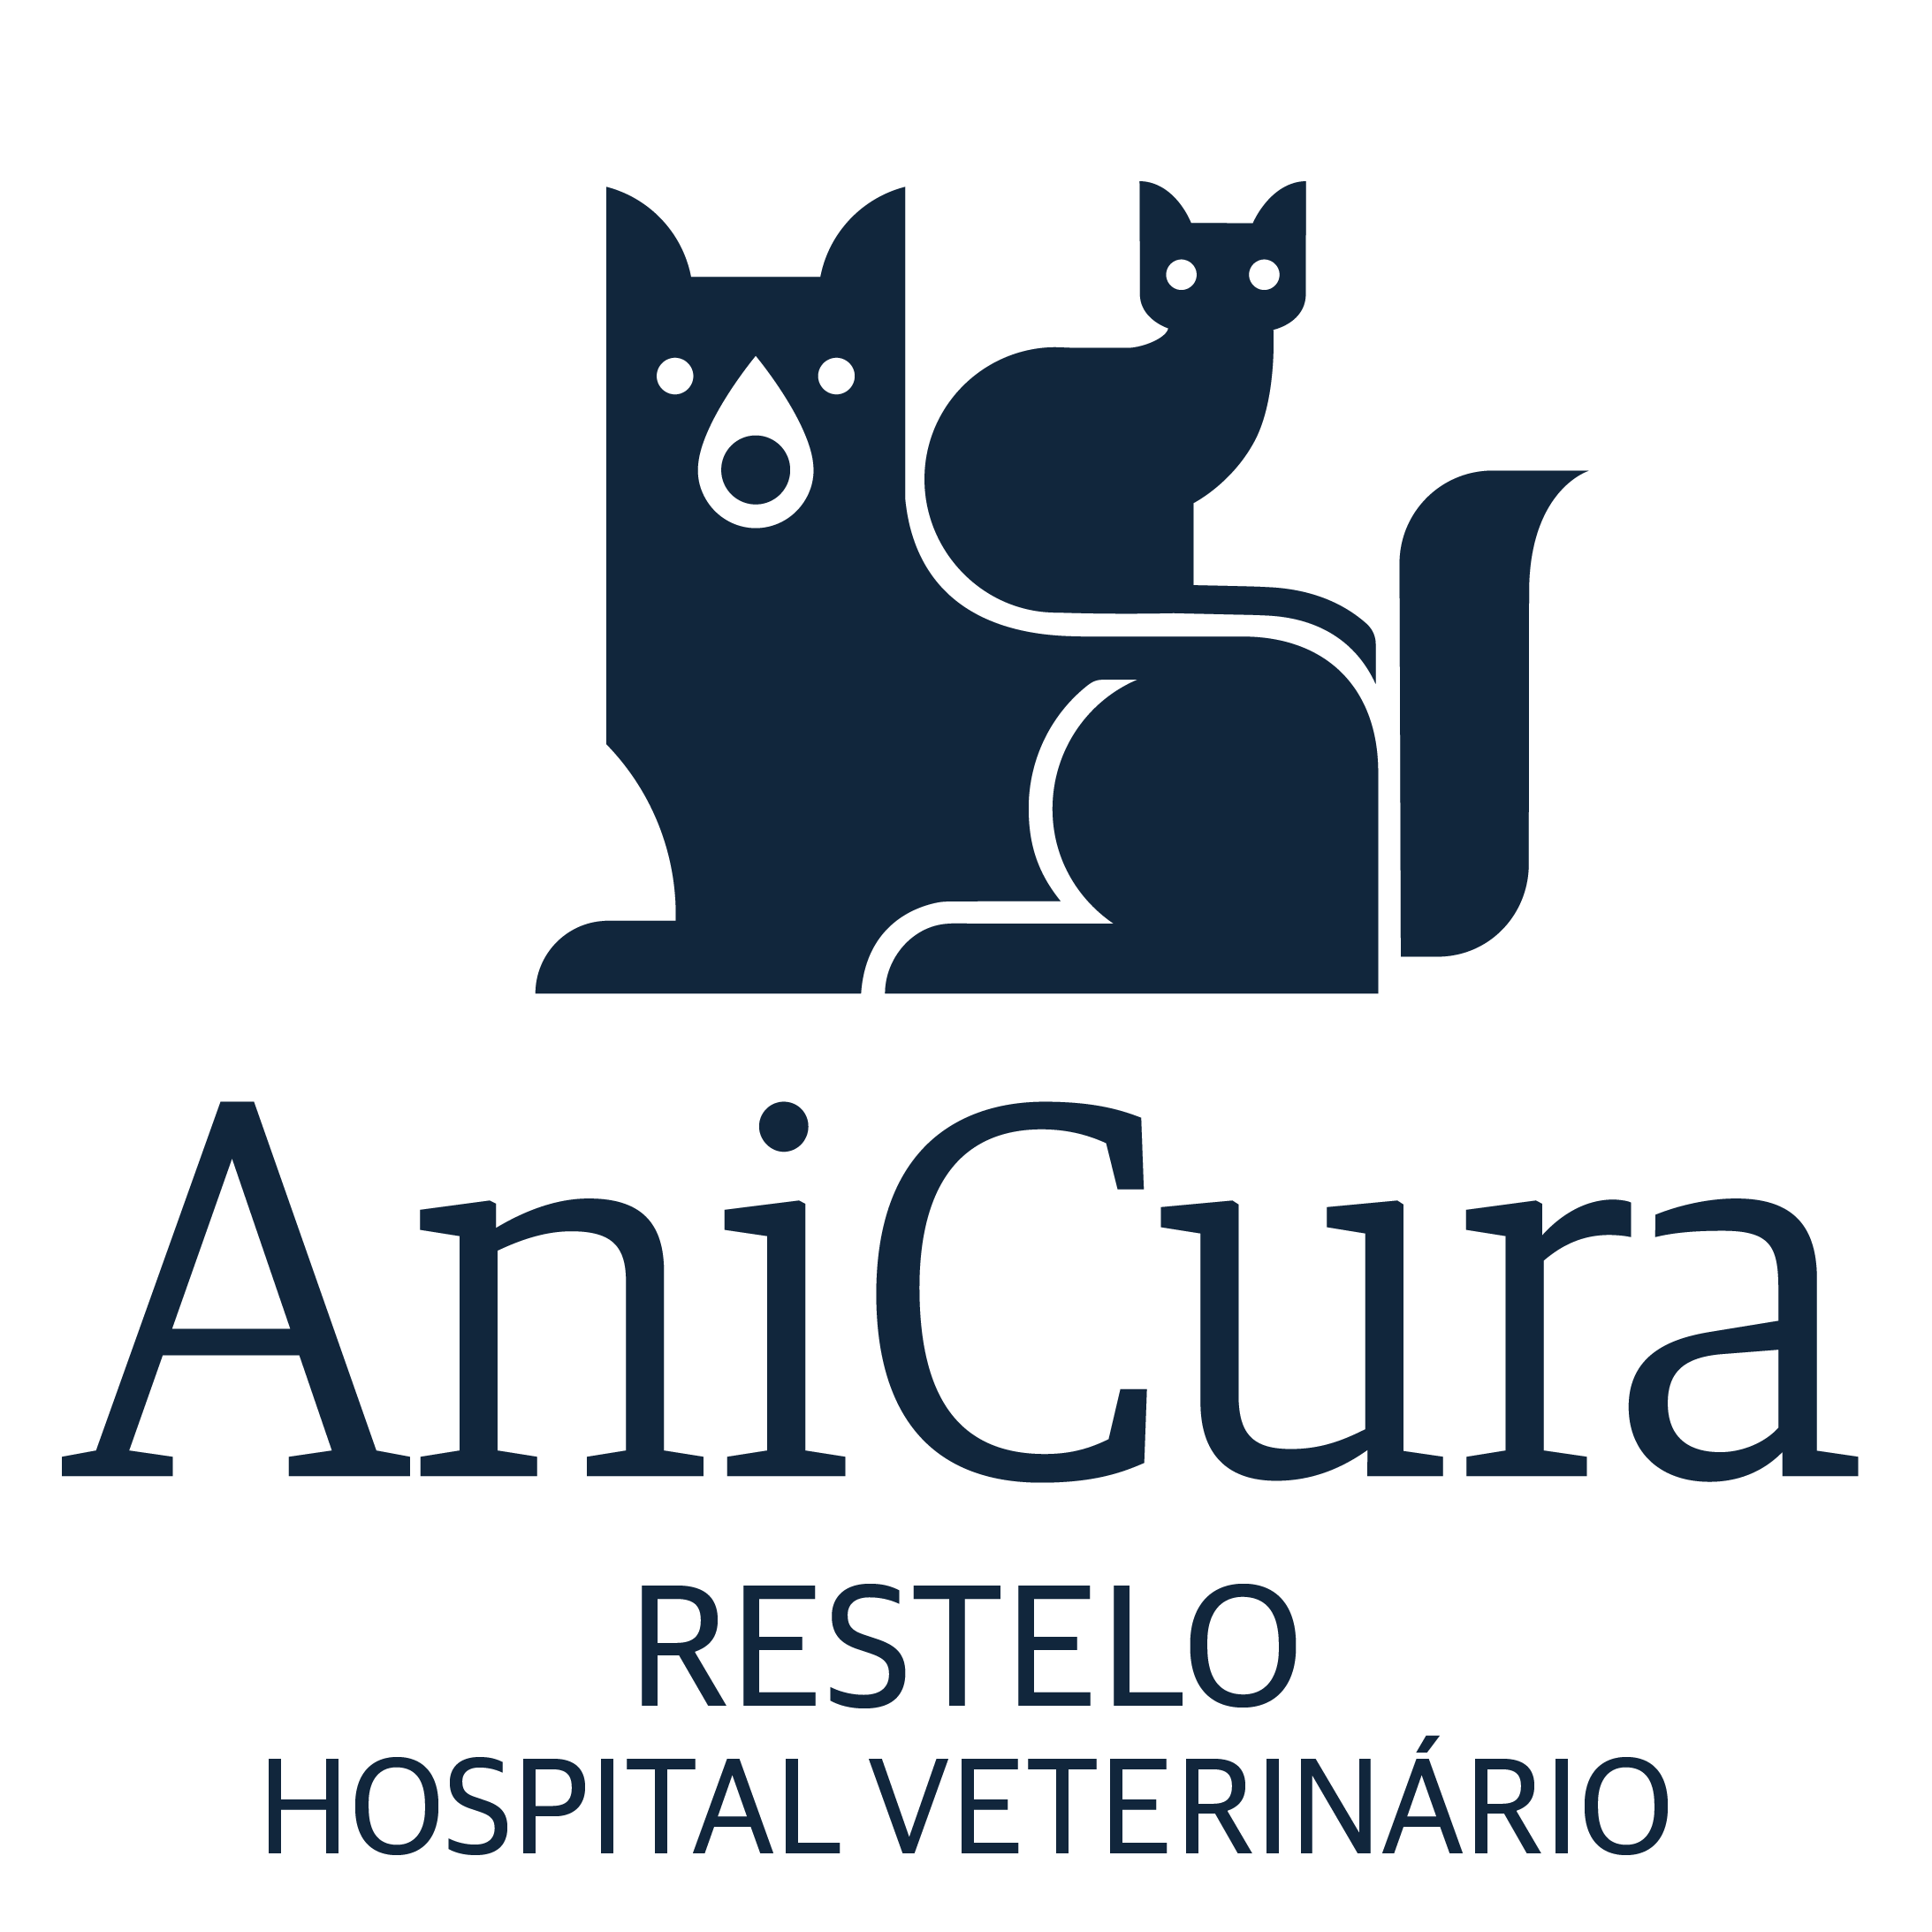 AniCura Restelo Hospital Veterinário logo